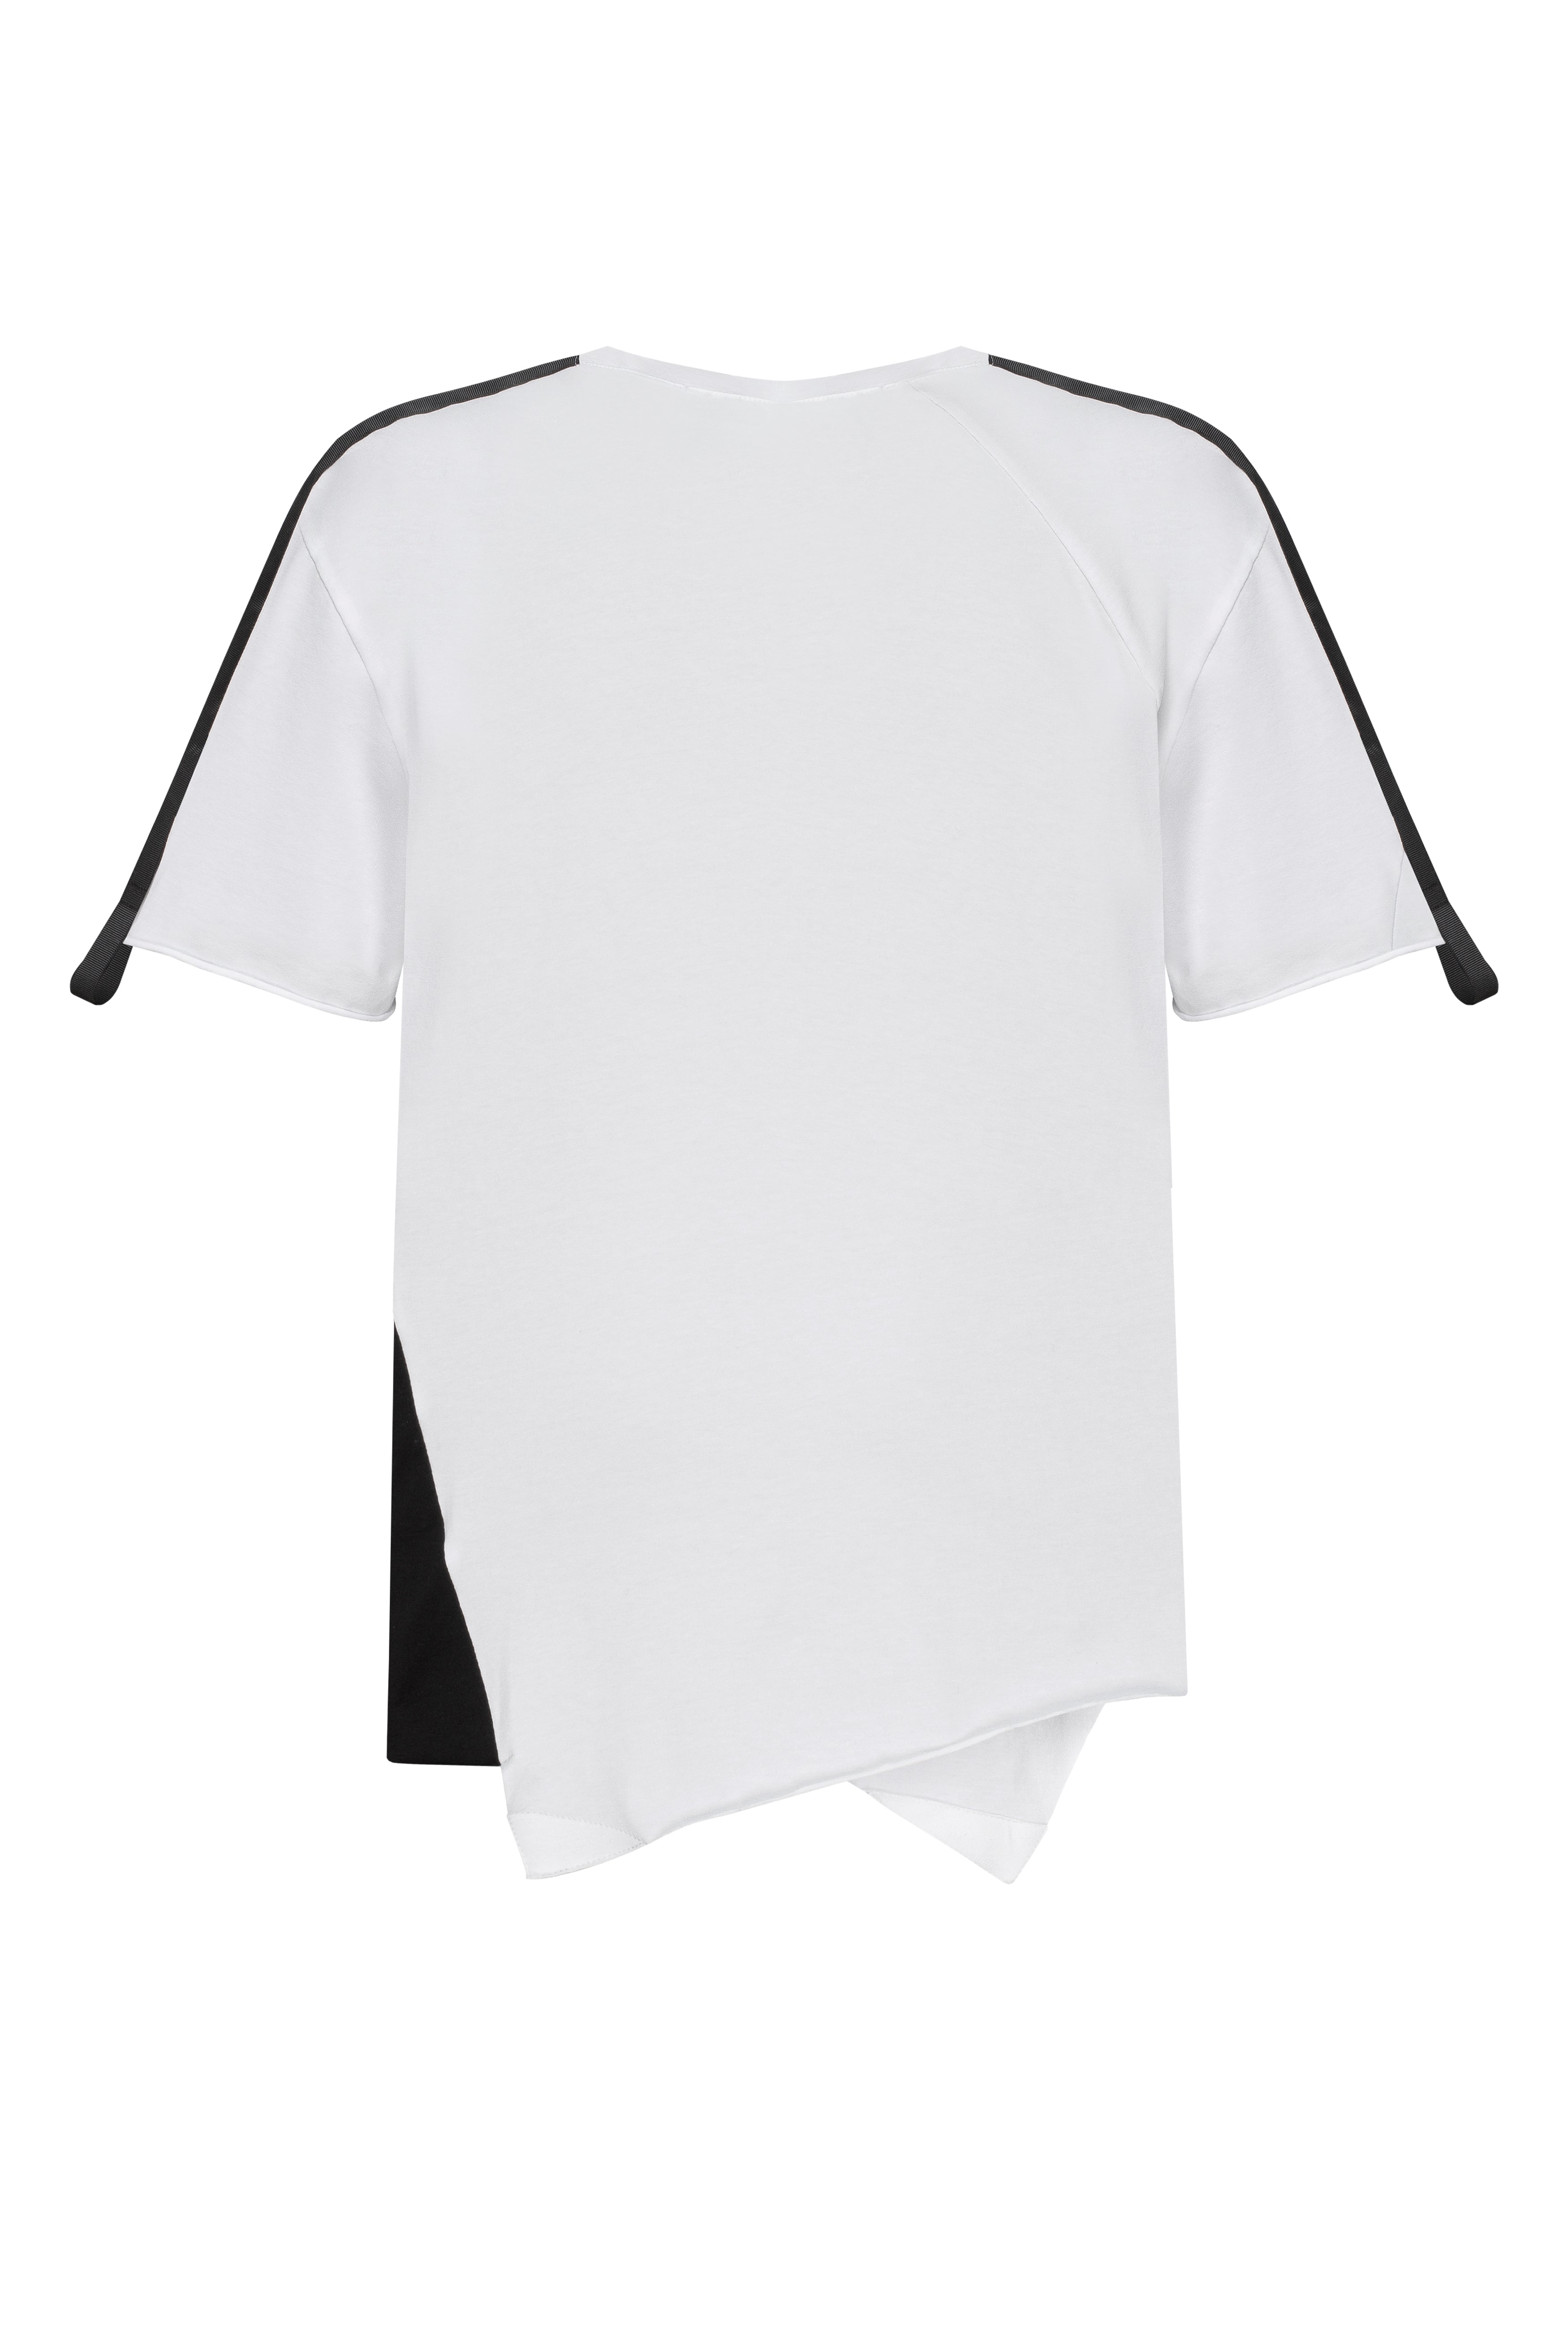 MDNT45 Tops & T-shirts White and black men's T-shirt